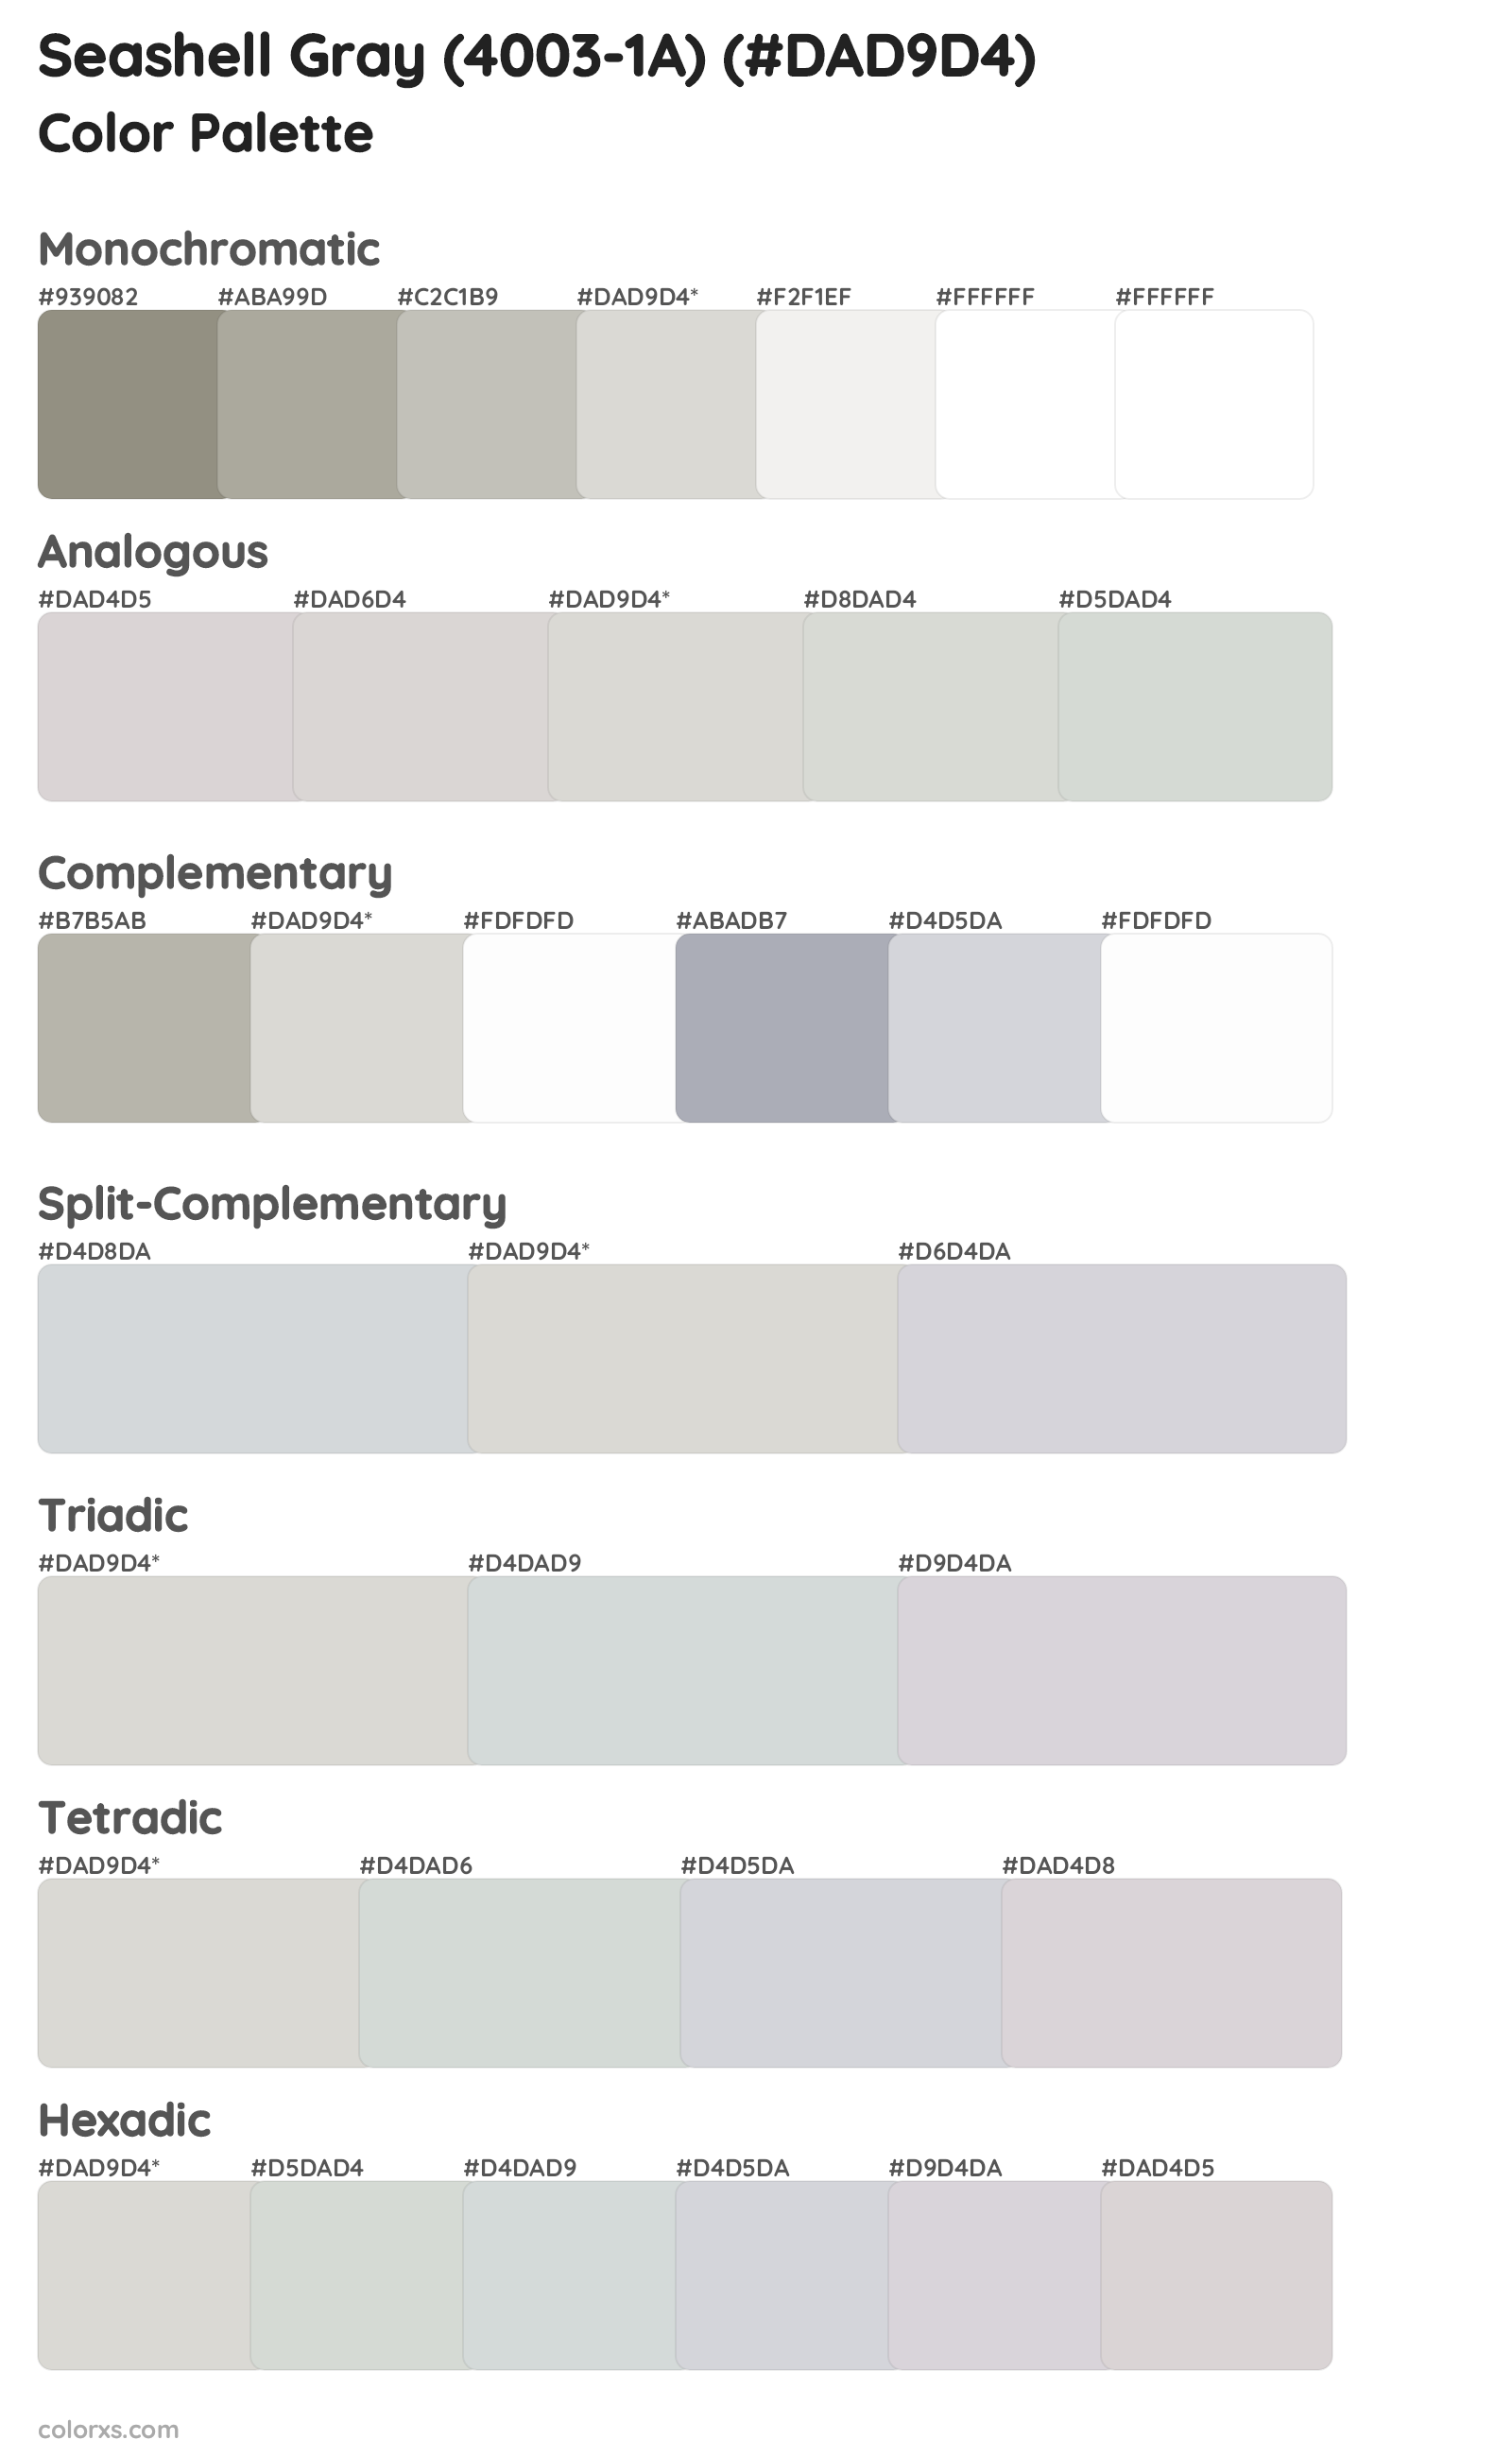 Seashell Gray (4003-1A) Color Scheme Palettes